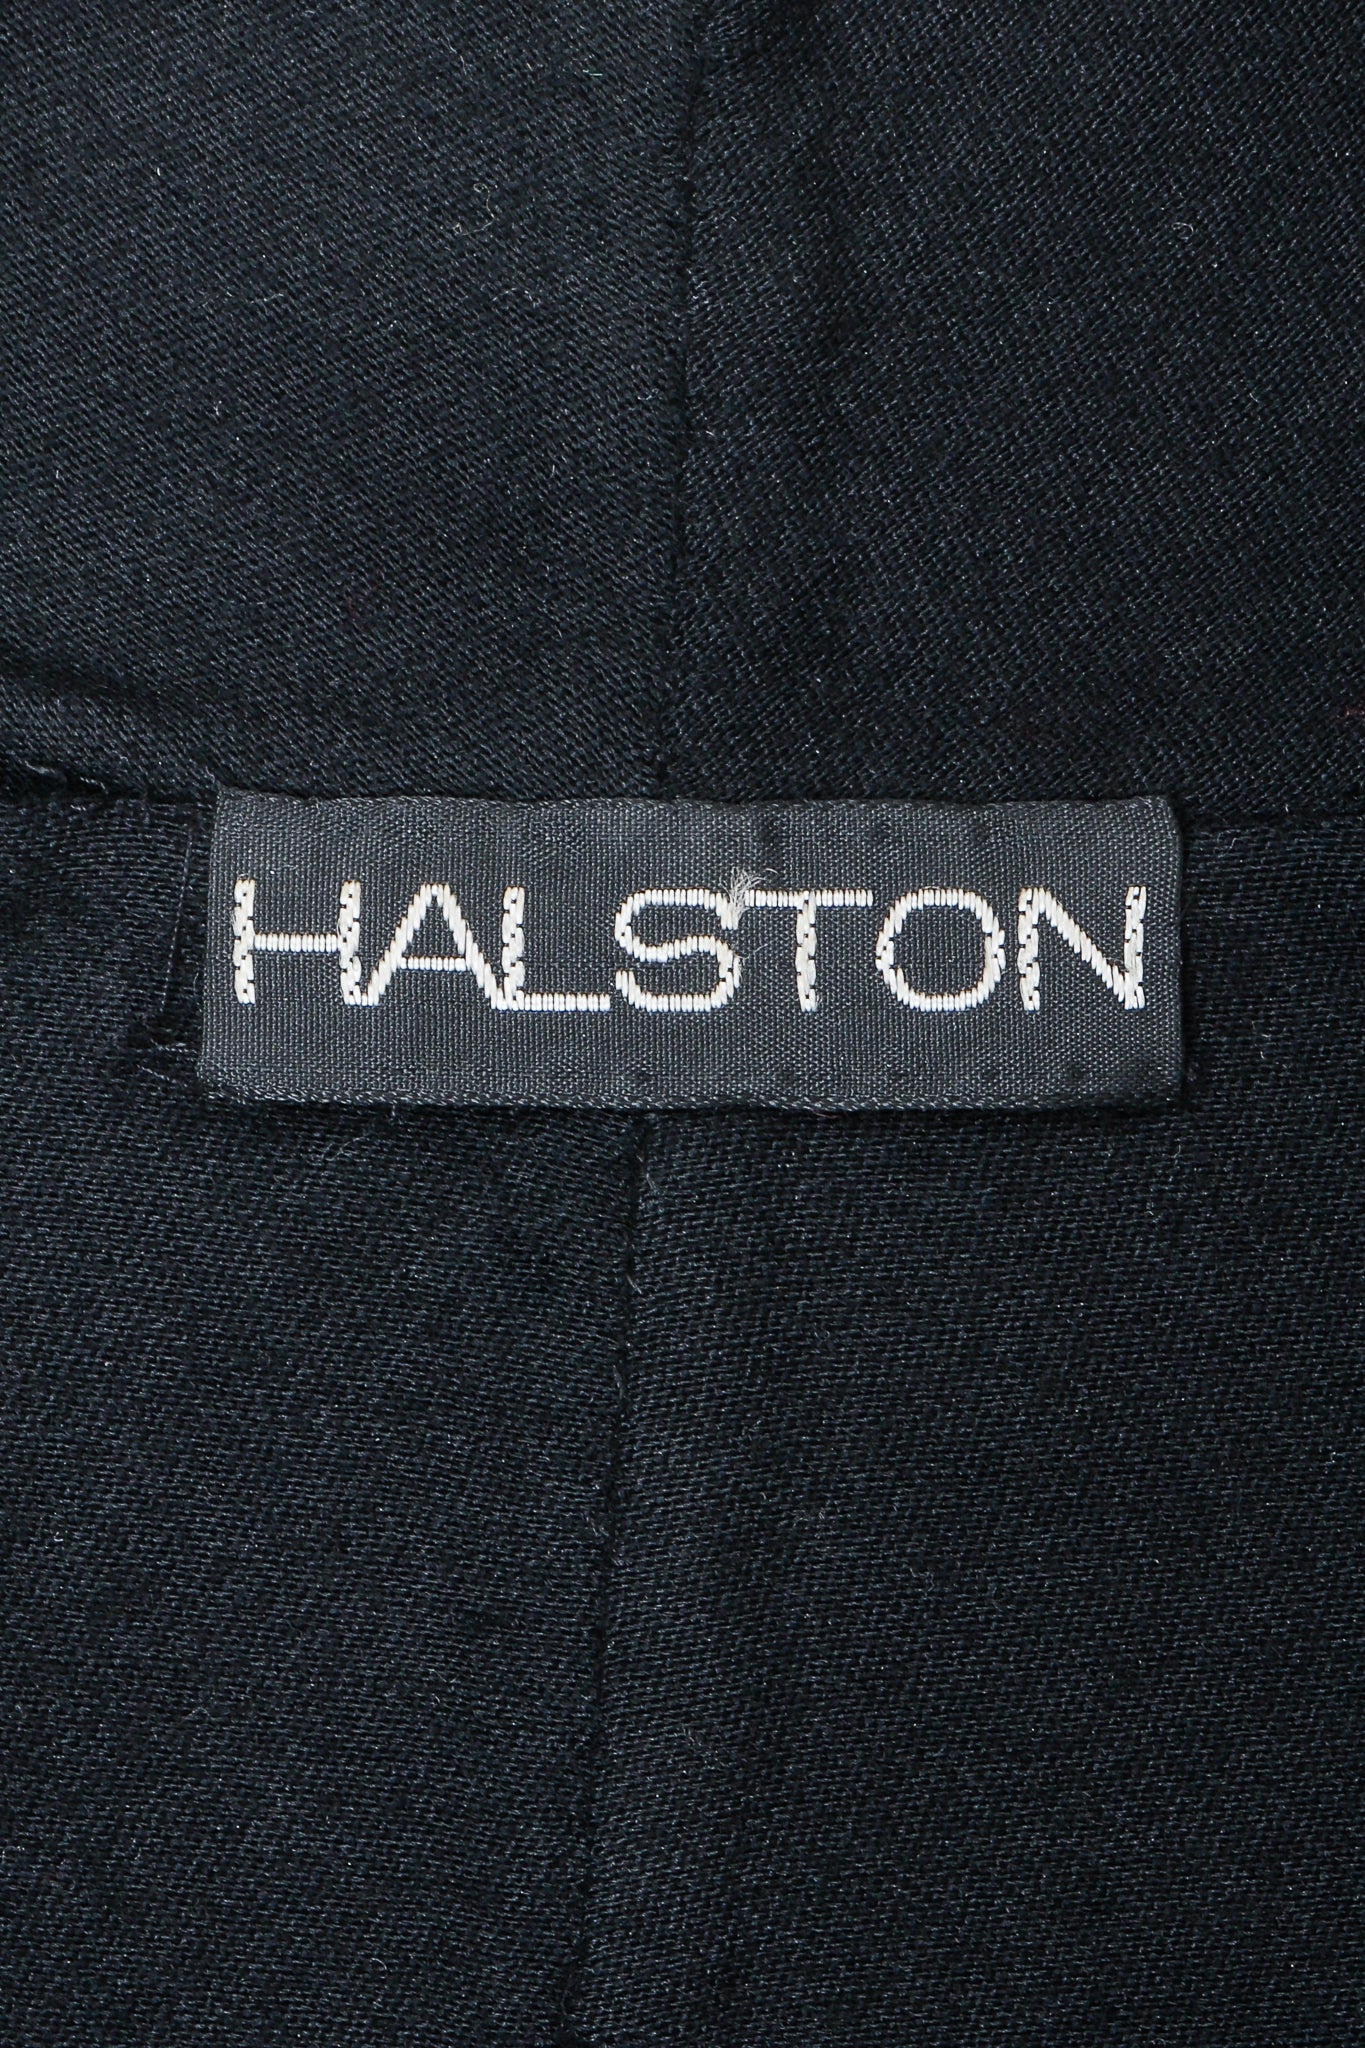 Vintage Halston label on black fabric